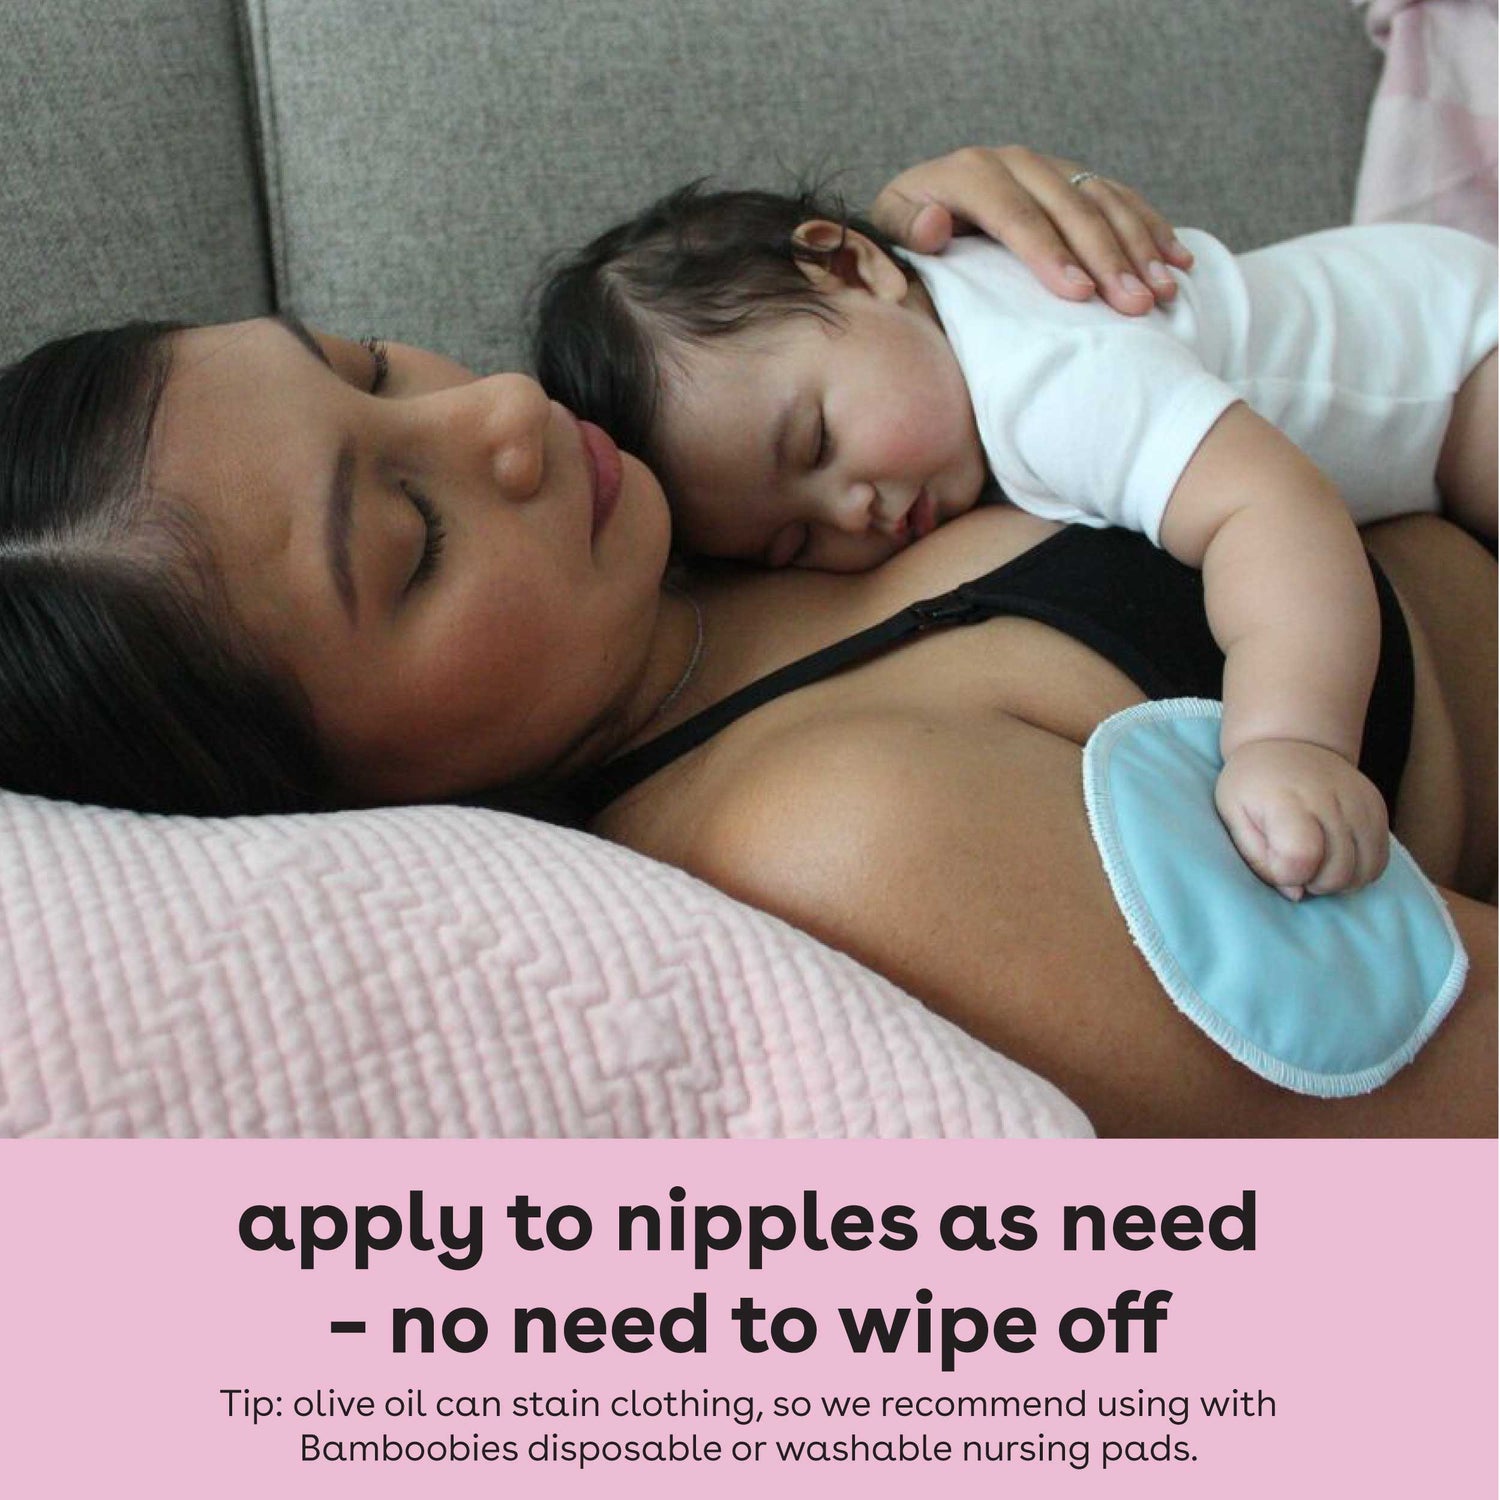 Apply nipple balm to nipples as need, no need to wipe off